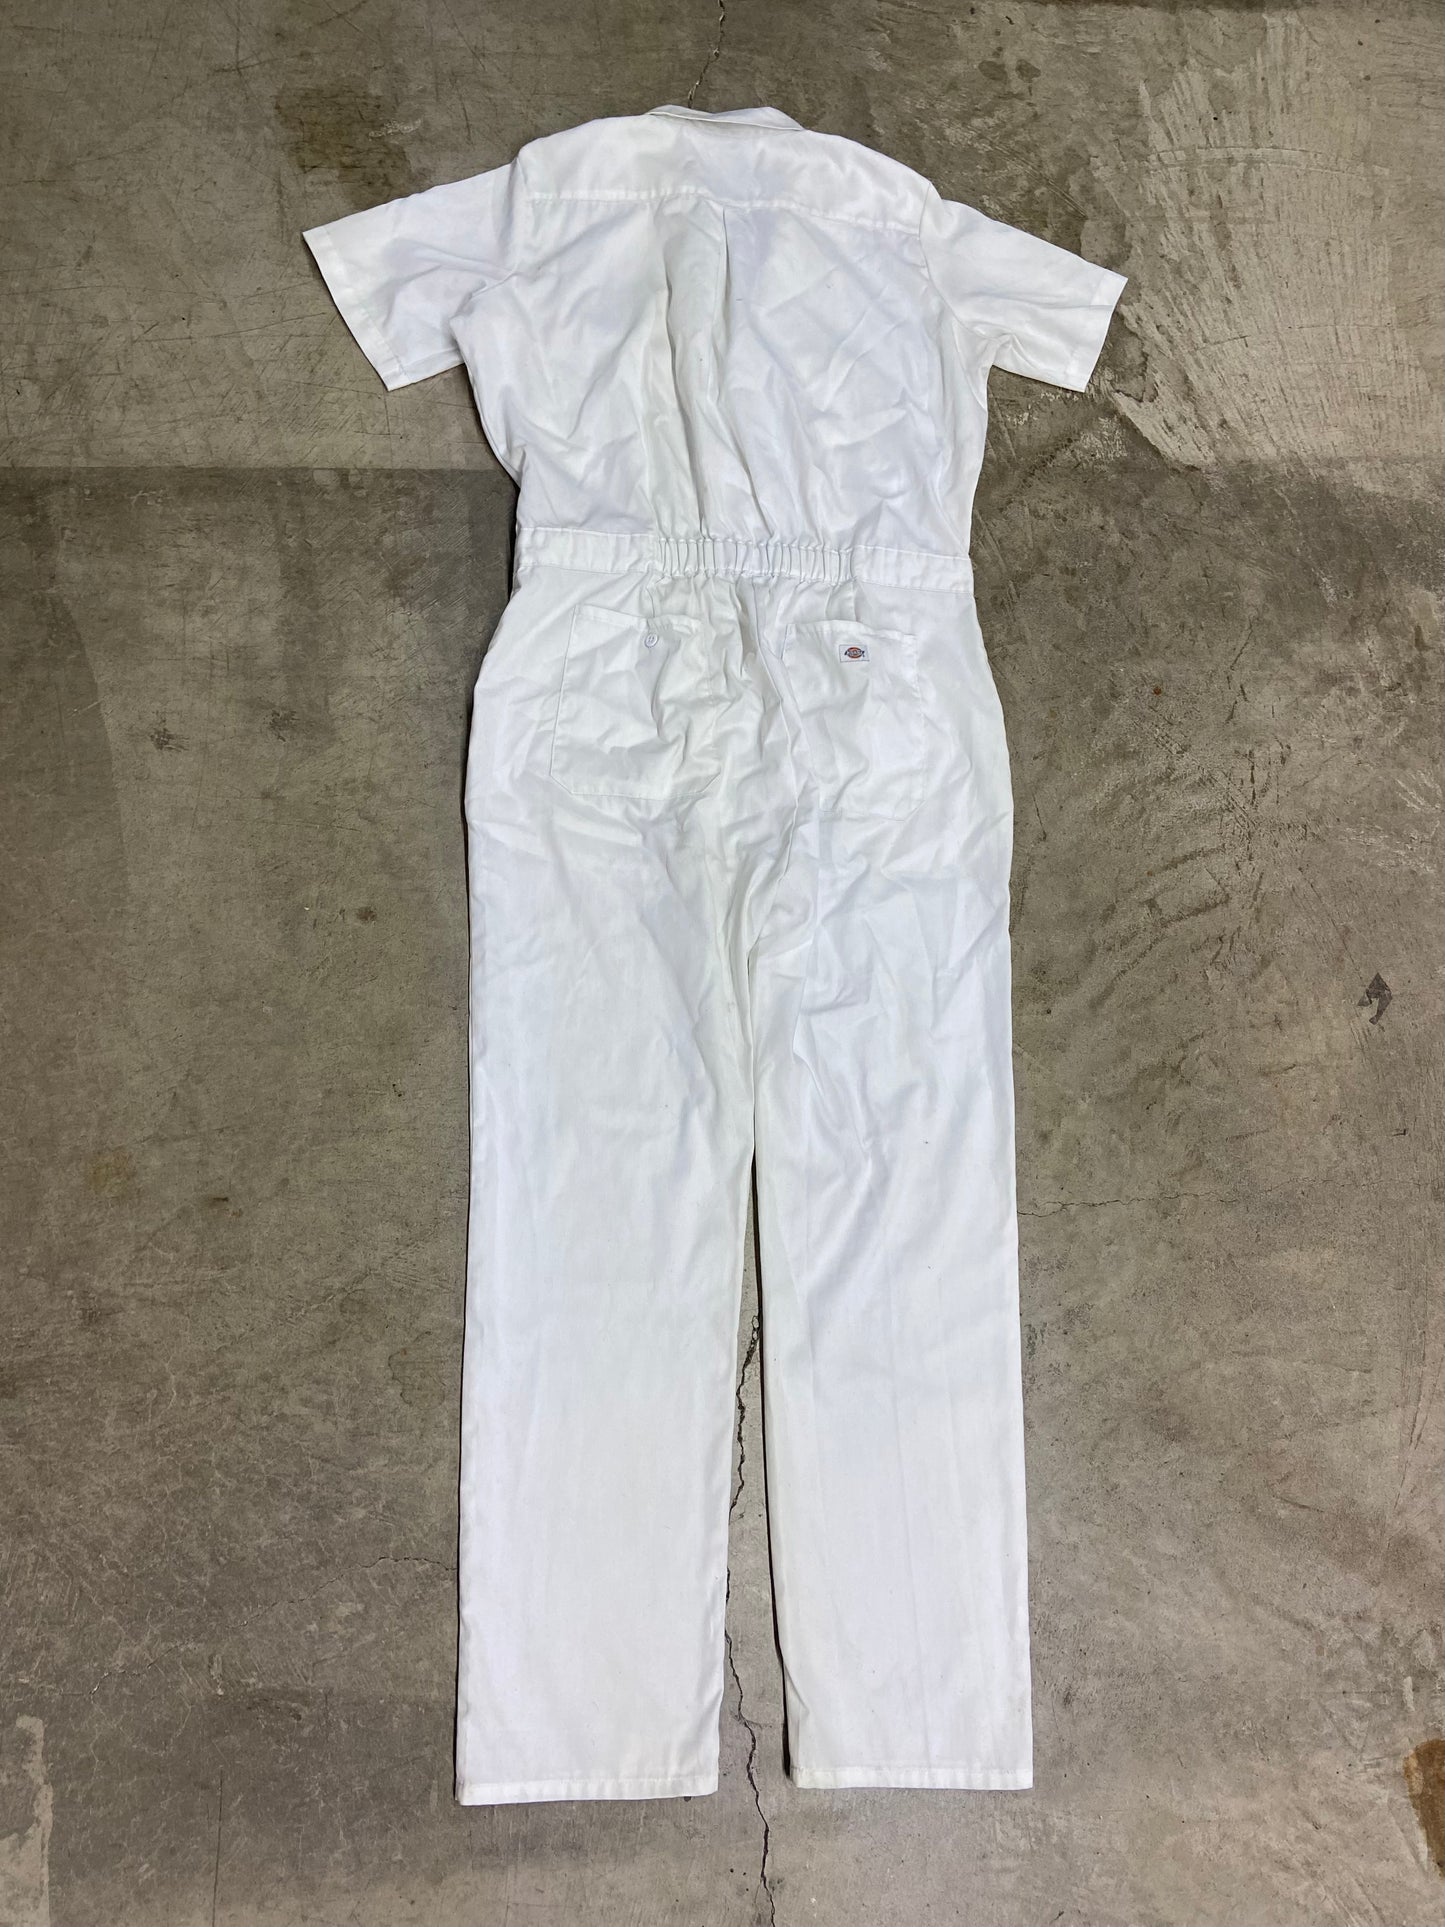 VTG Dickies White Coveralls Jumpsuit Sz XL